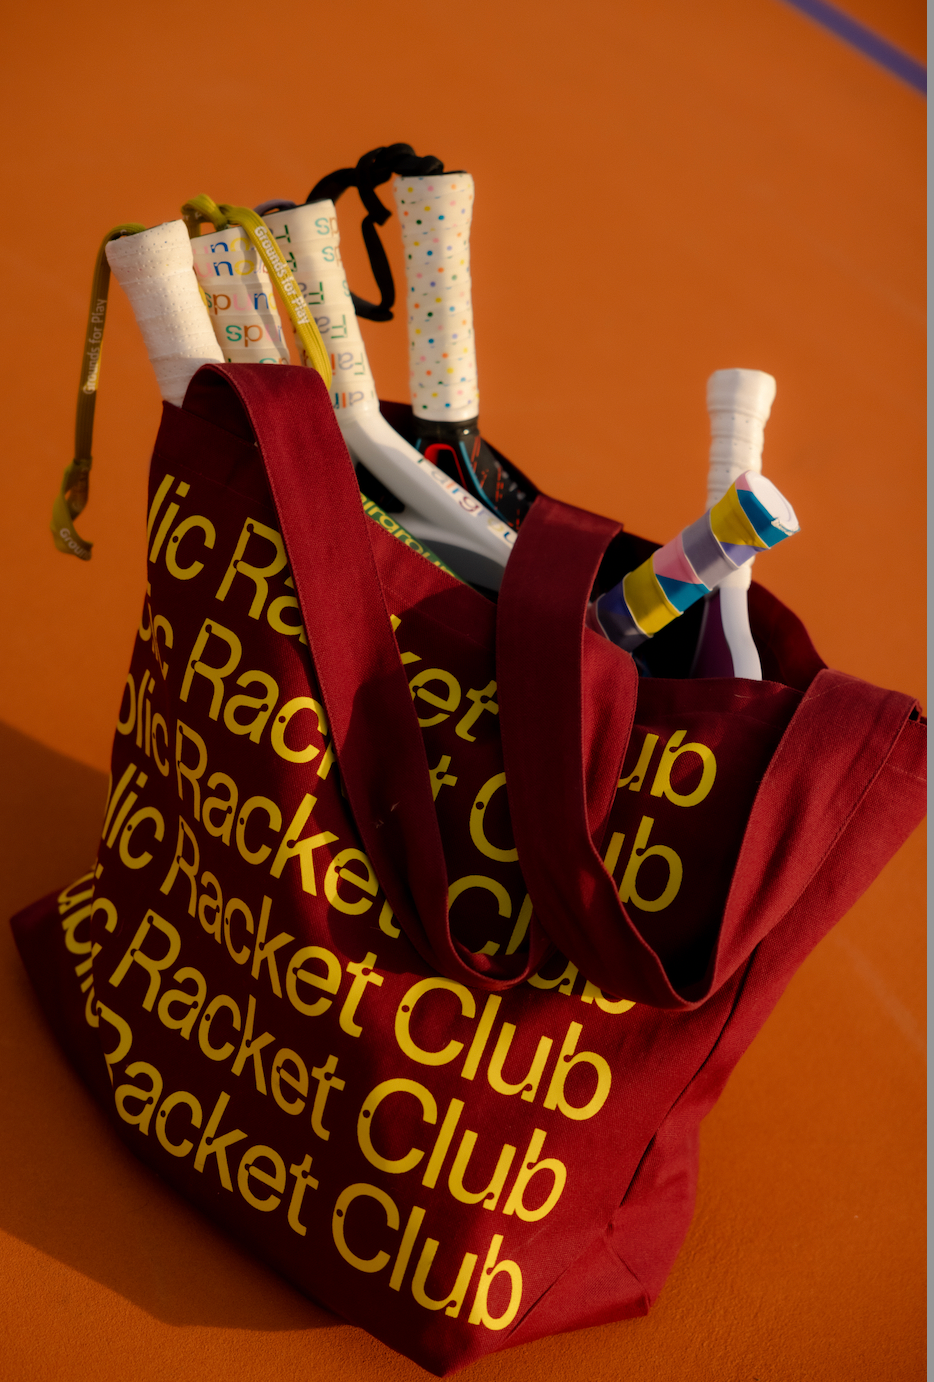 Public Racket Club Large Tote Bag